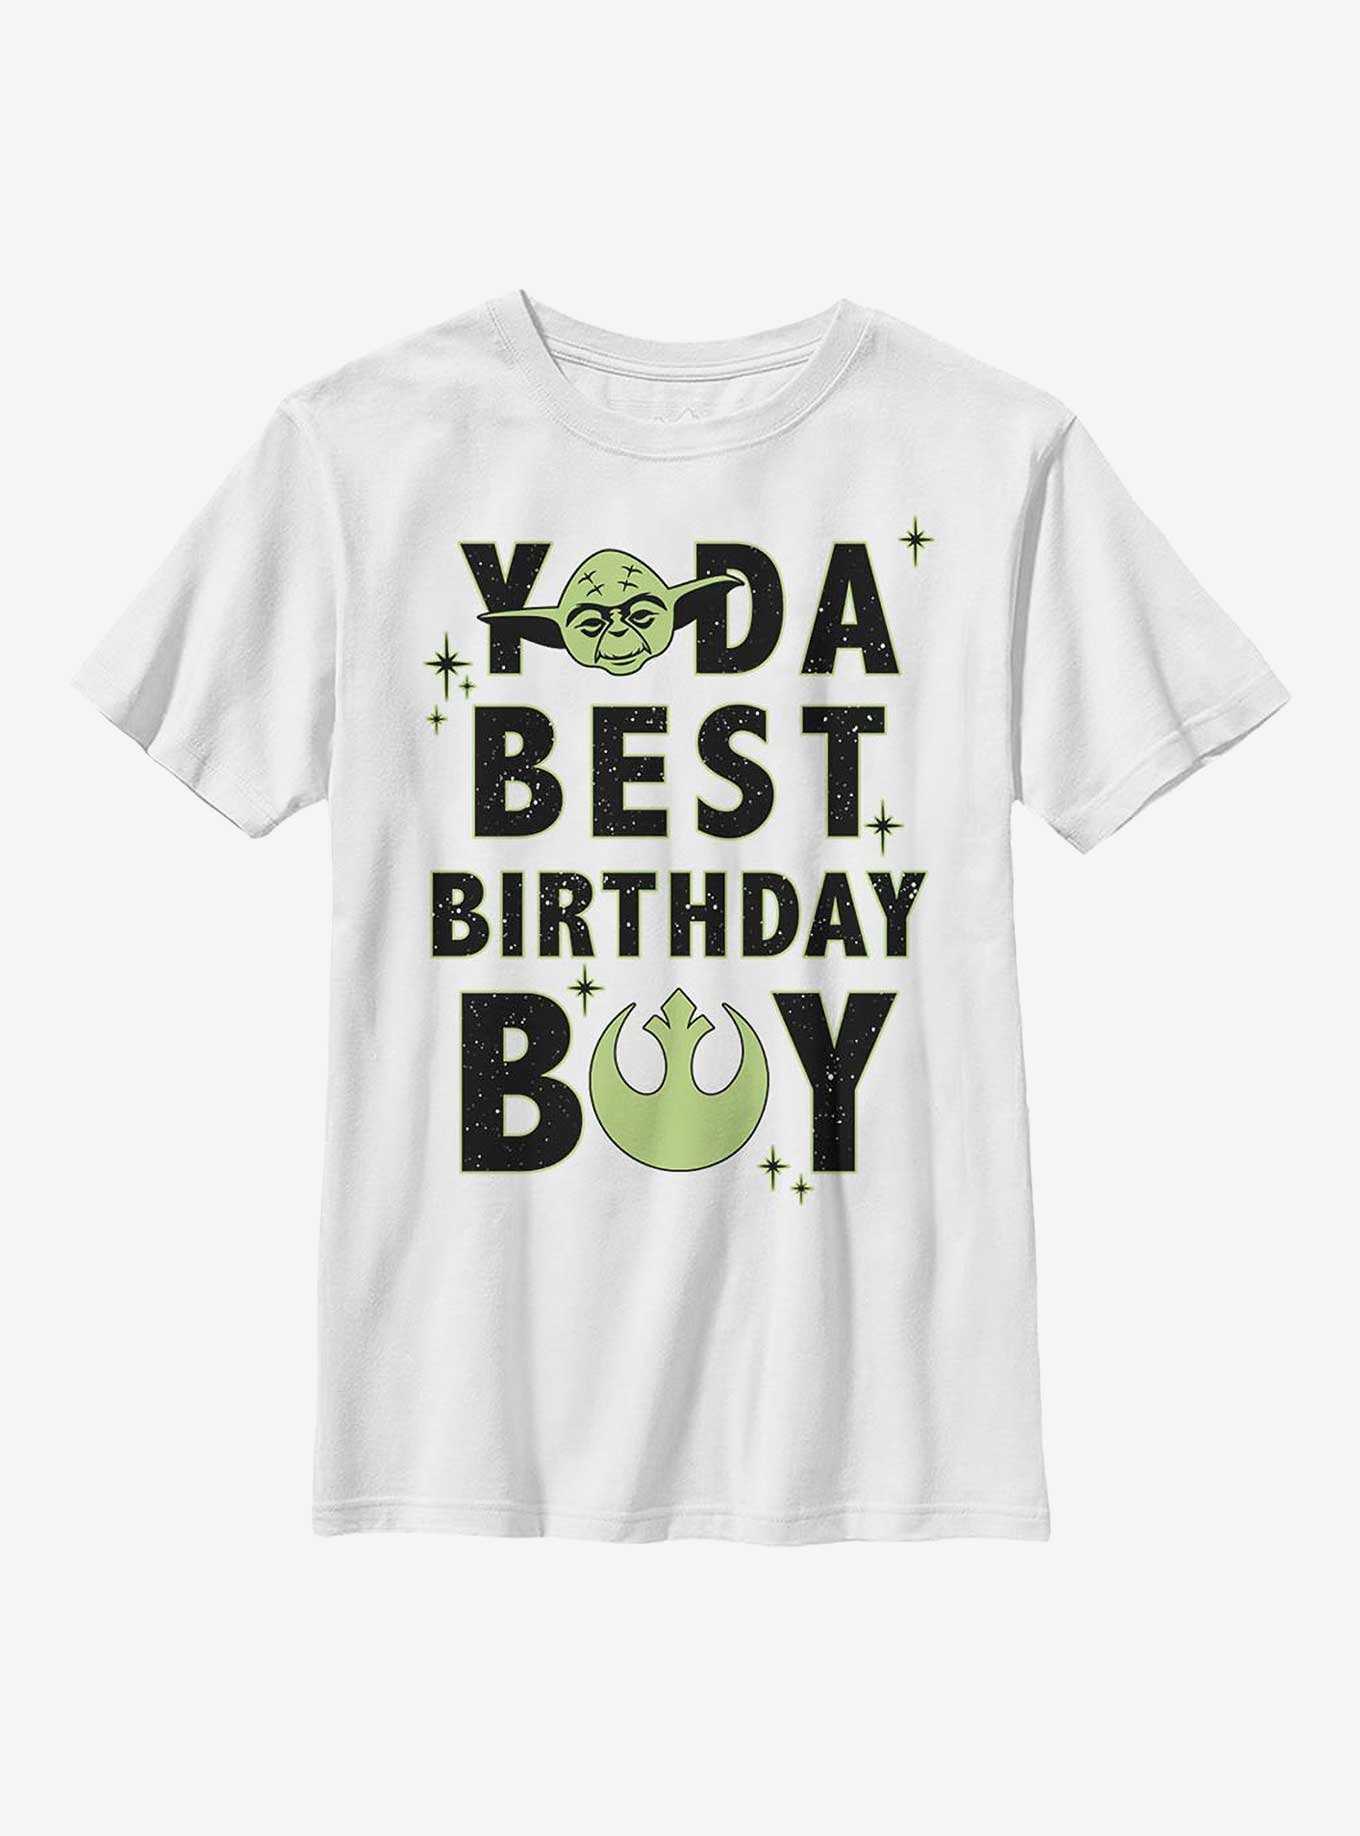 Star Wars Yoda Best Birthday Boy Youth T-Shirt, , hi-res